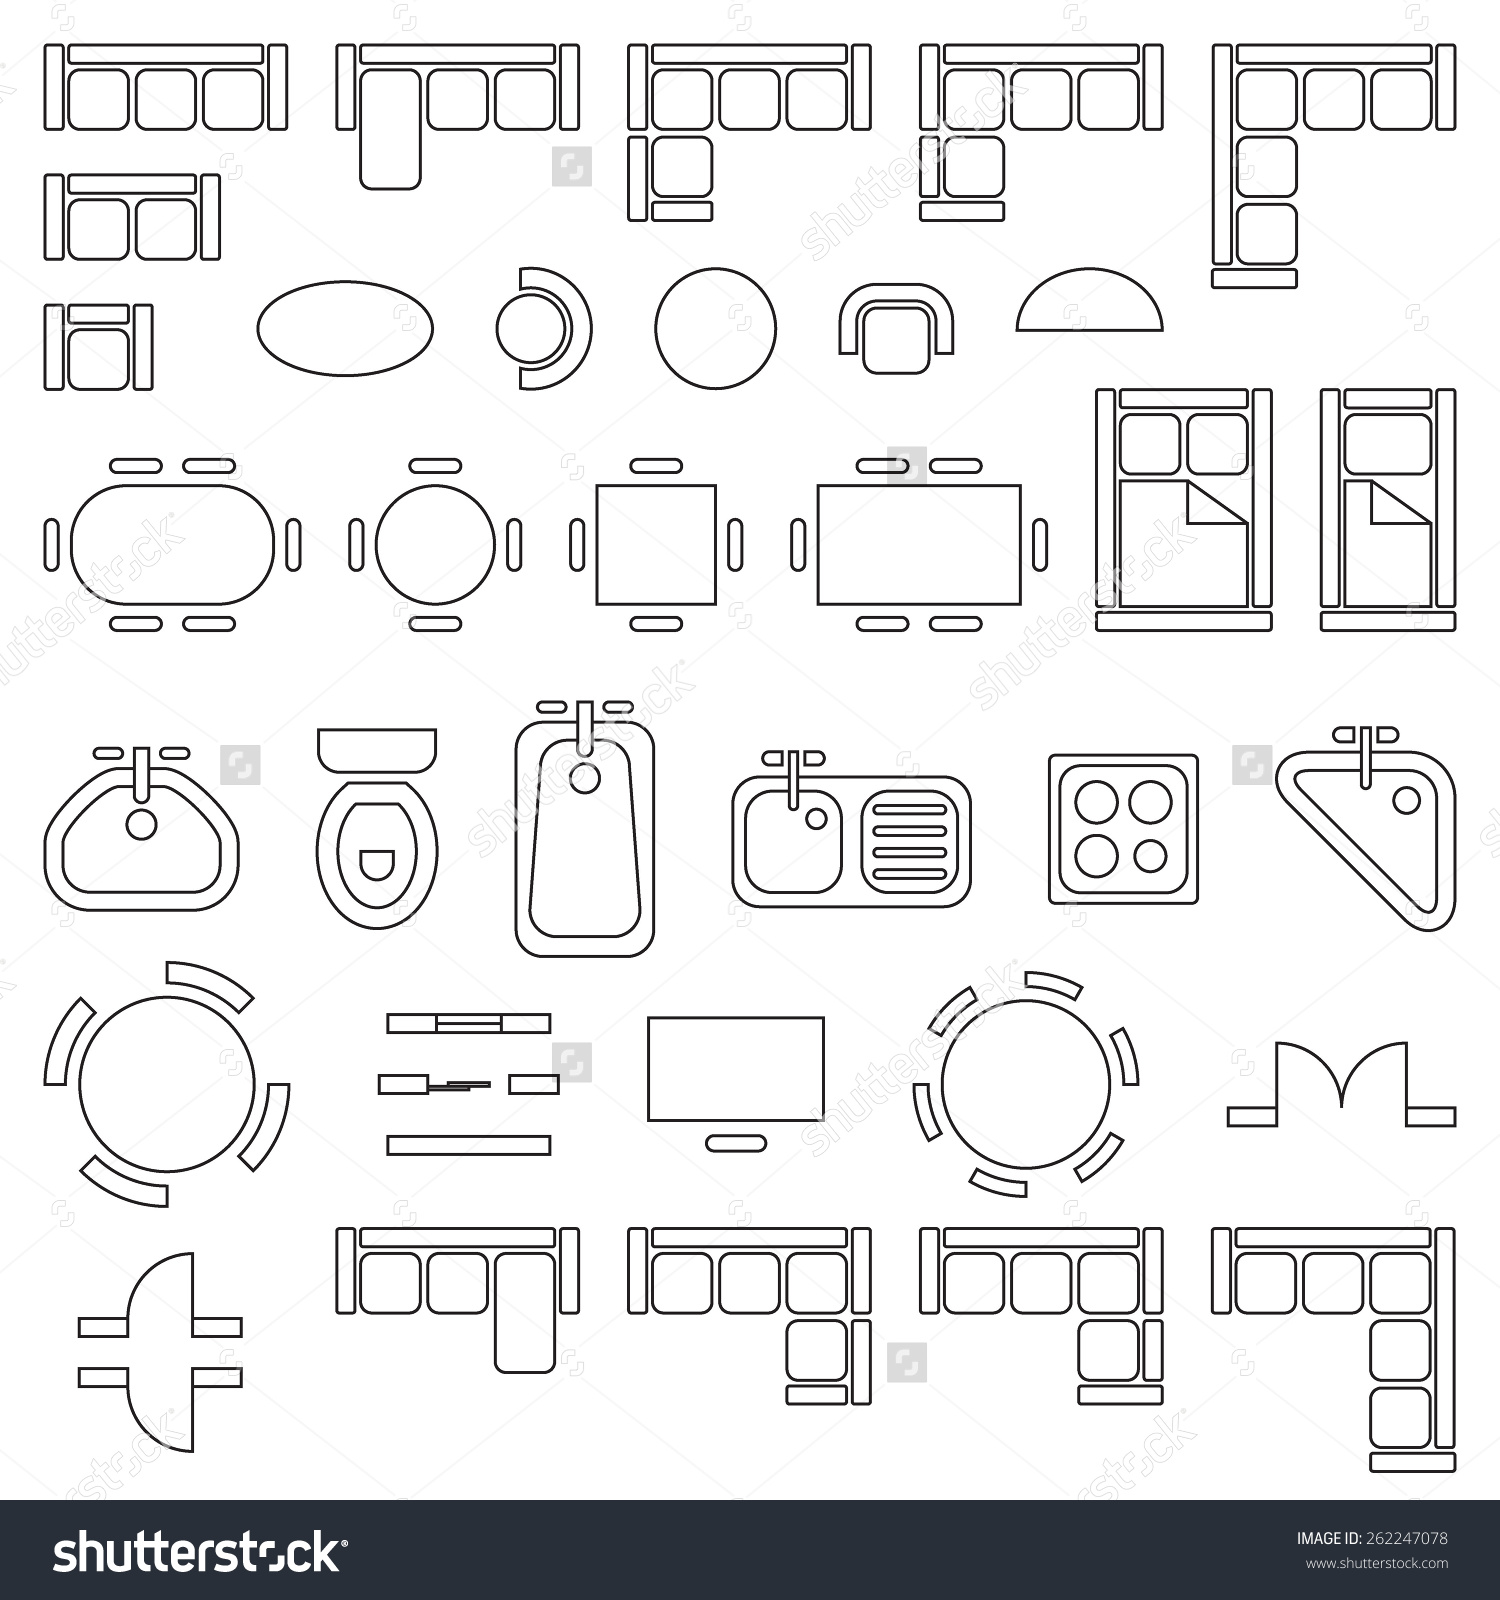 Free house plan drawing symbols - bopqeusb